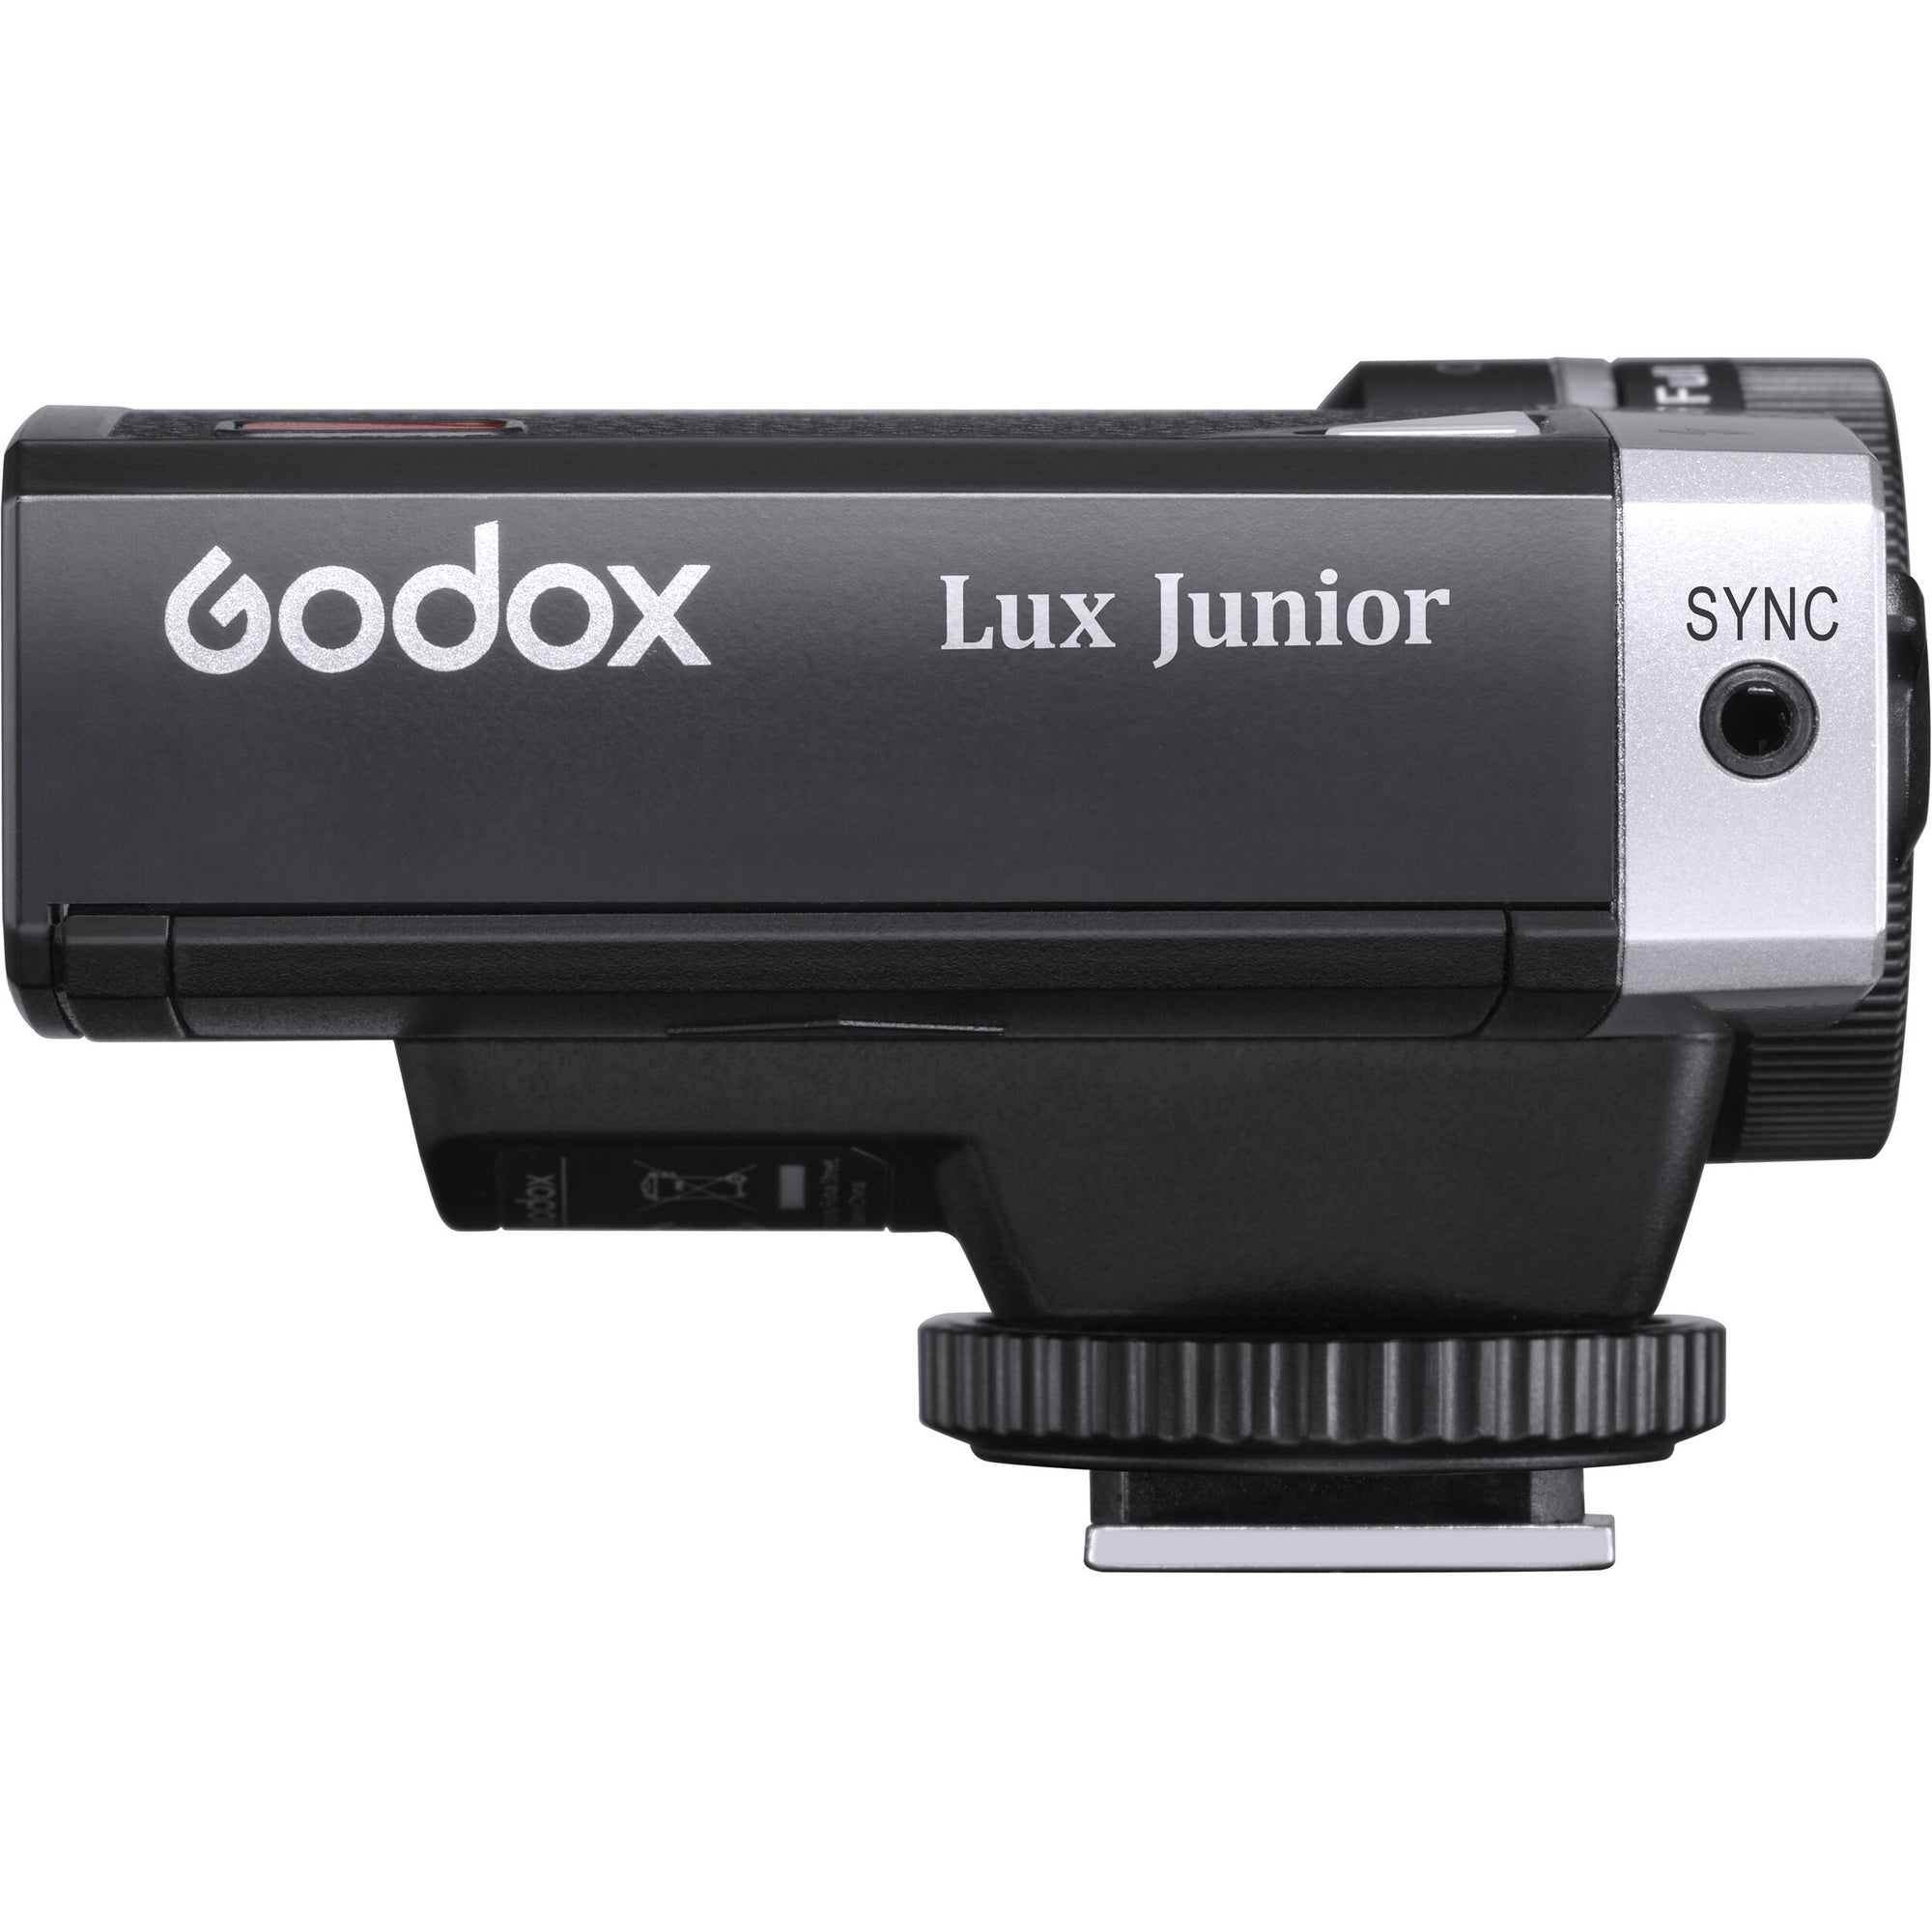 Godox Lux Junior Retro Camera Flash - Strobepro Studio Lighting